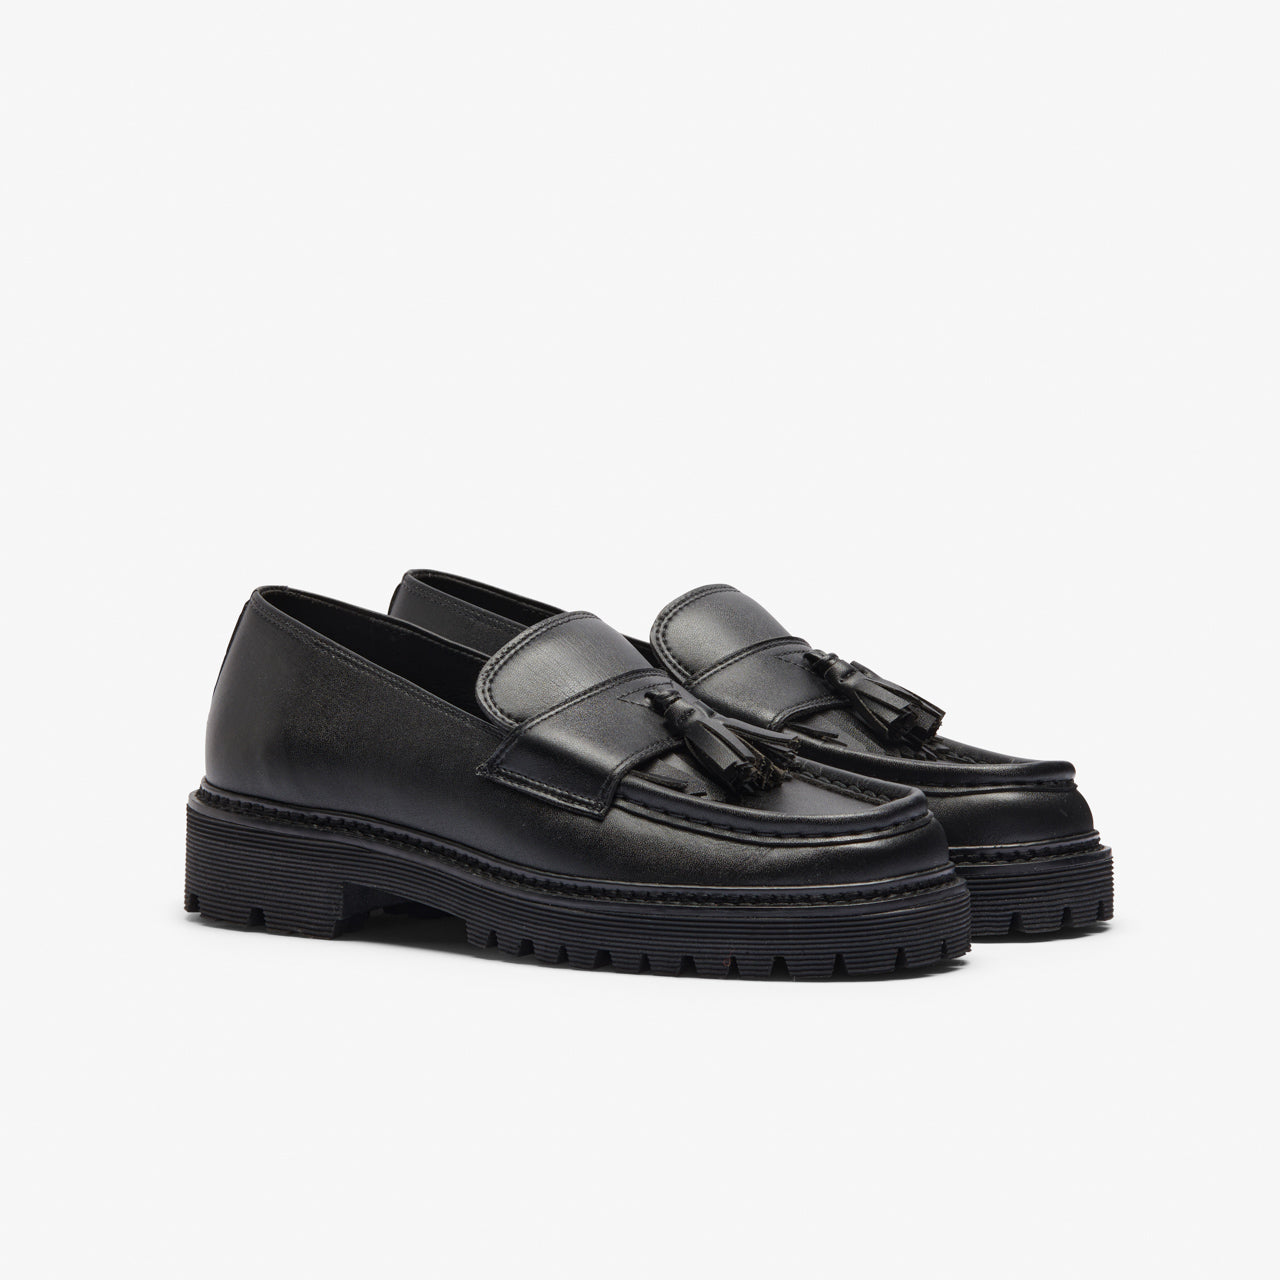 Noskin Vegan Footwear Mater Tassle Black Loafer